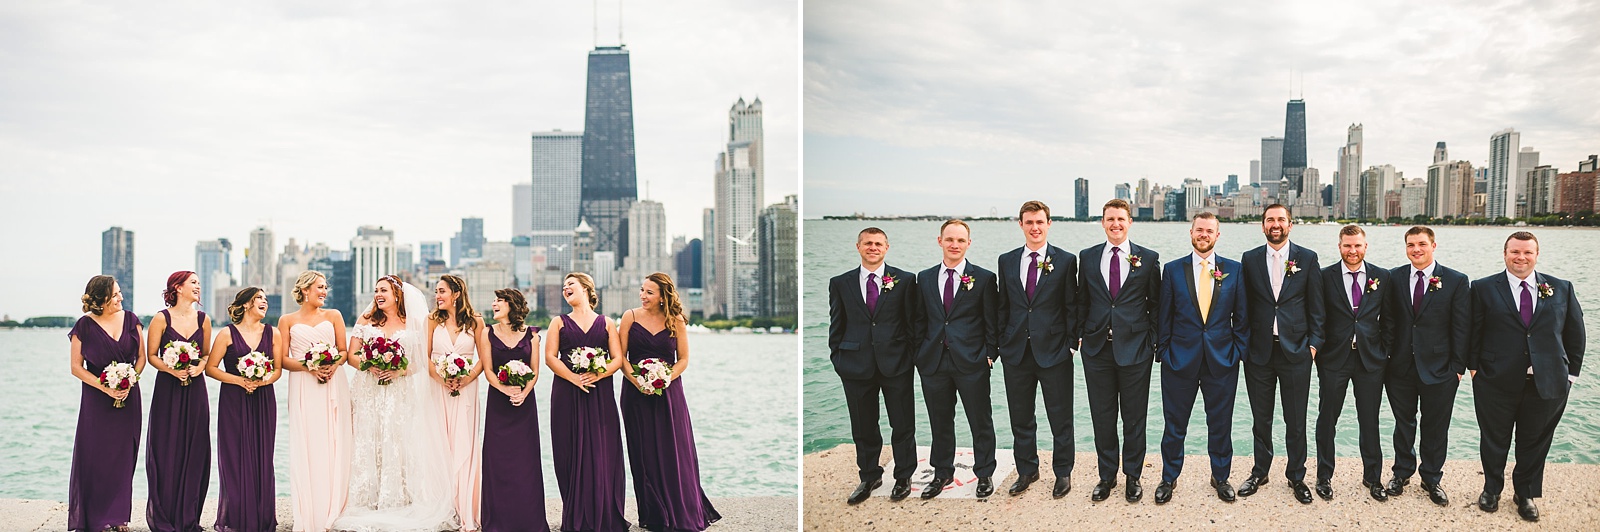 43 bridal party at lakefront chicago - Hilton Chicago Wedding Photographer // Sarah + Aaron